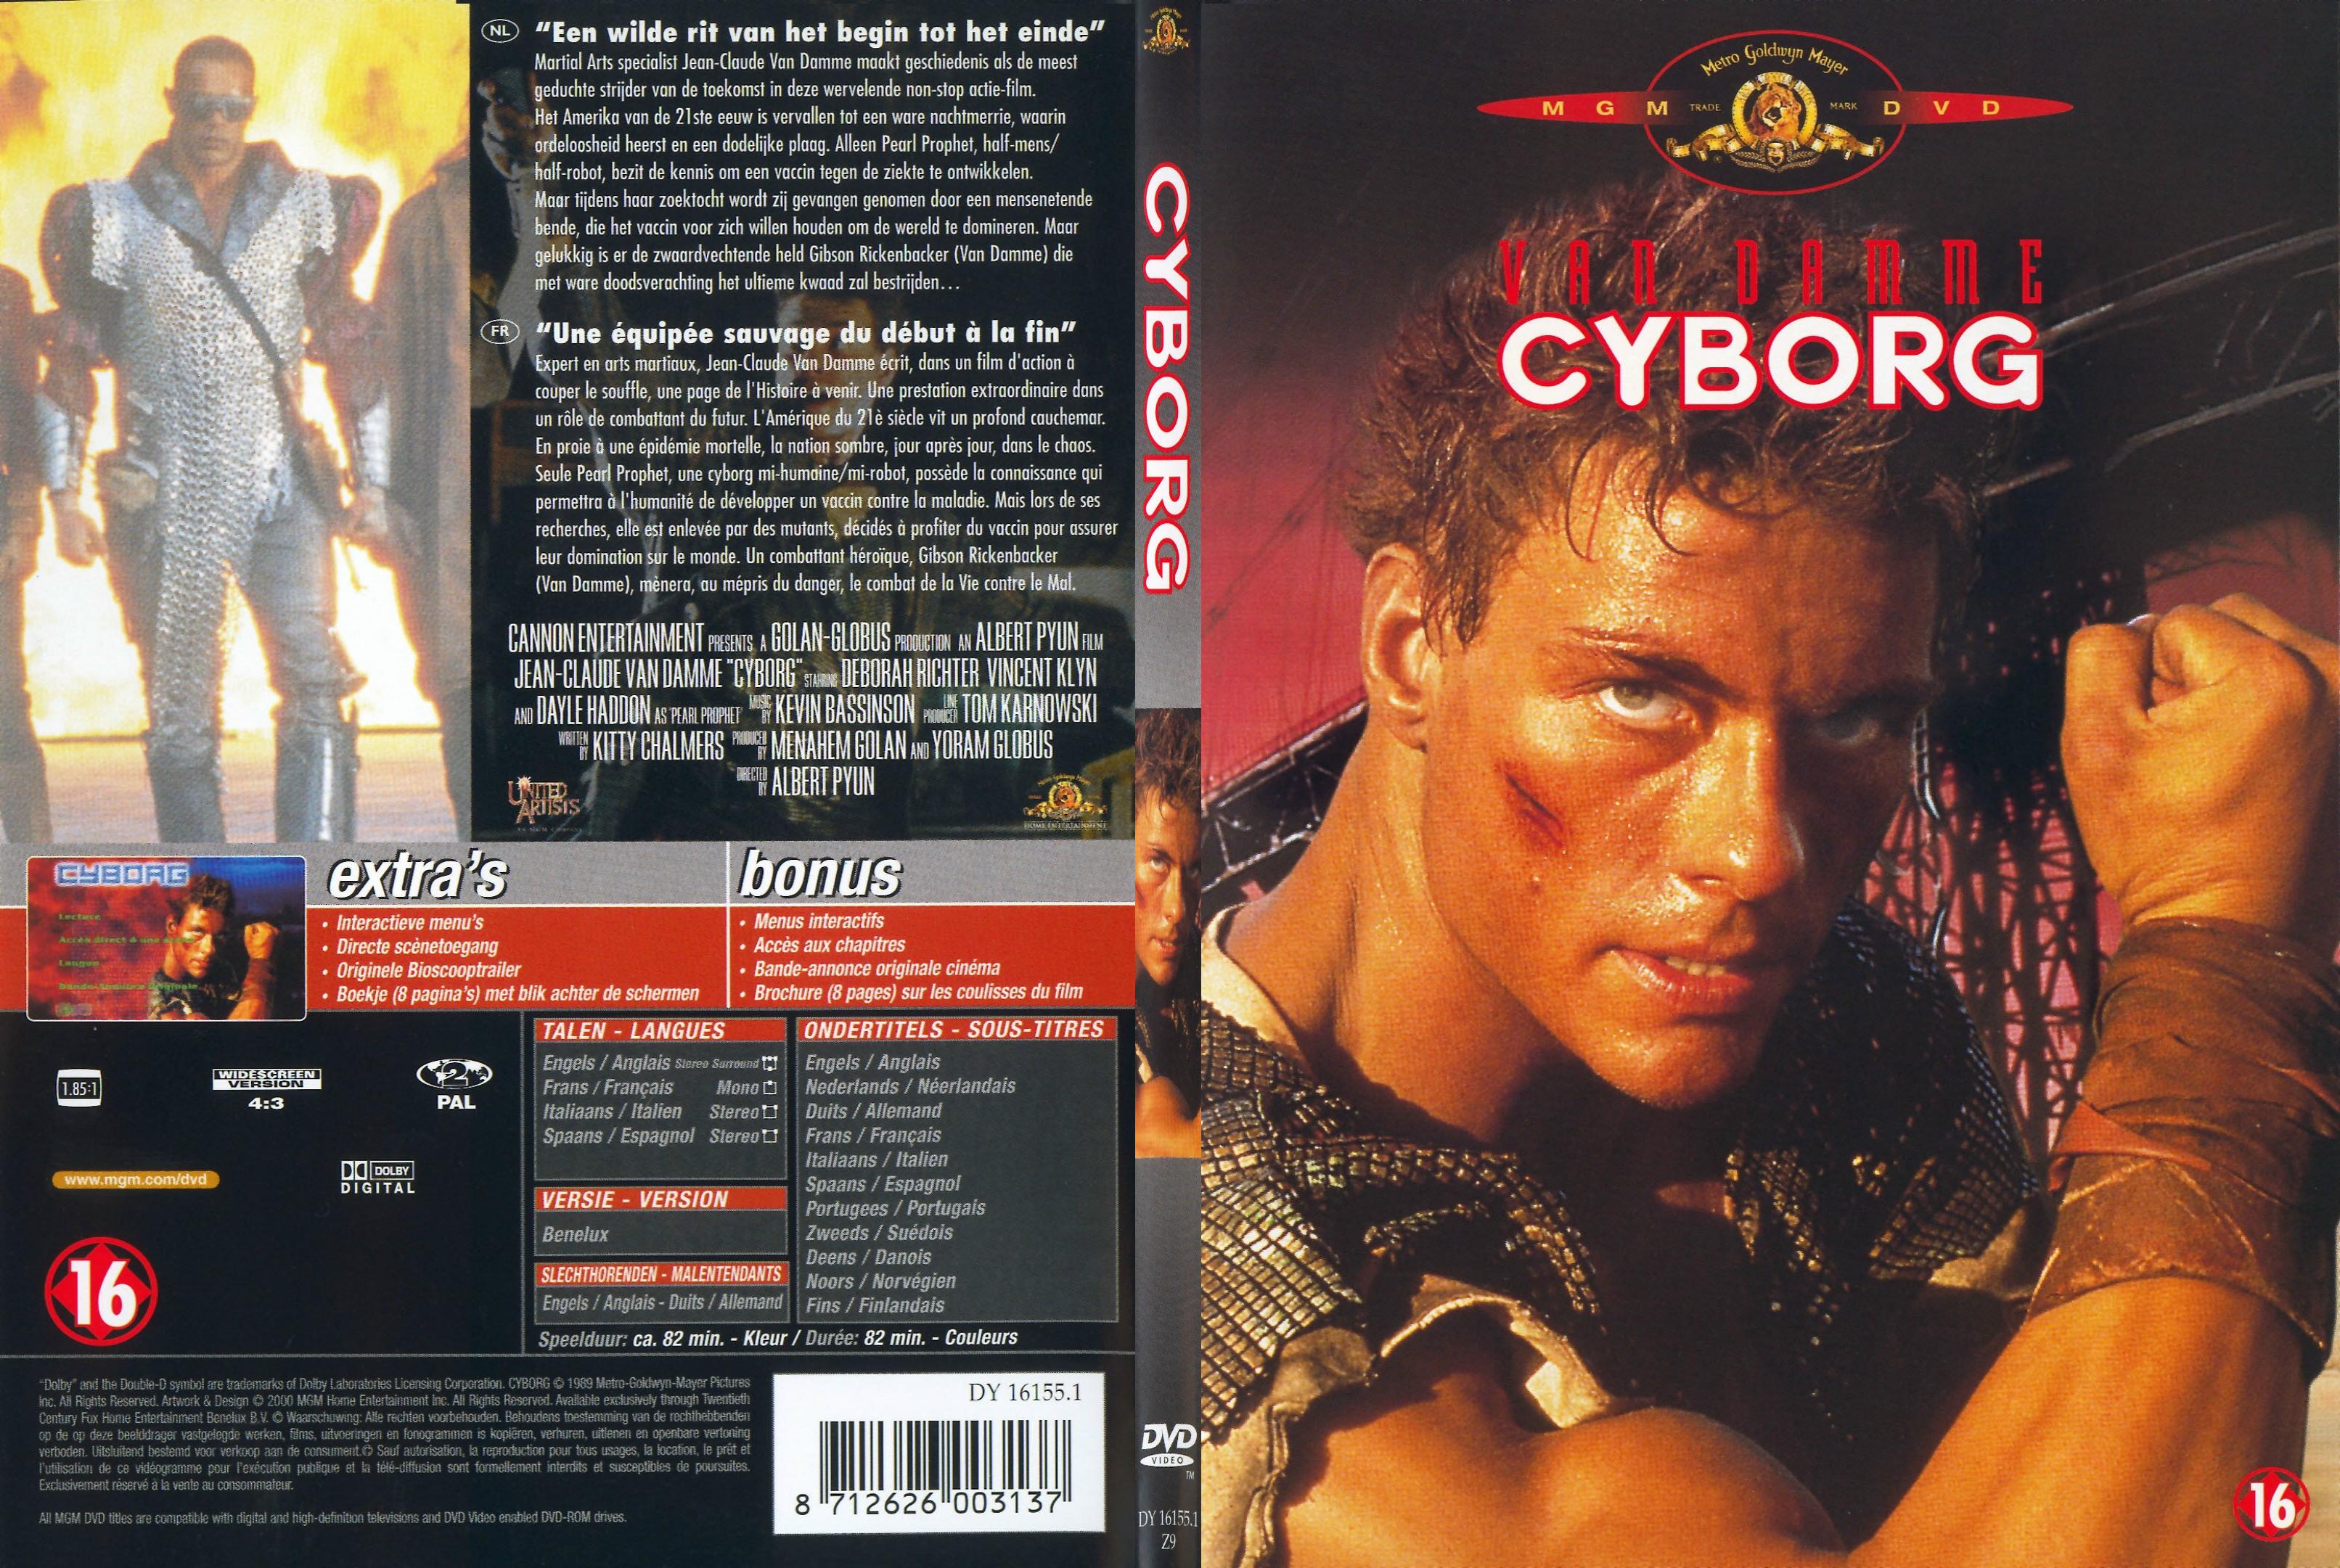 Jaquette DVD Cyborg - SLIM